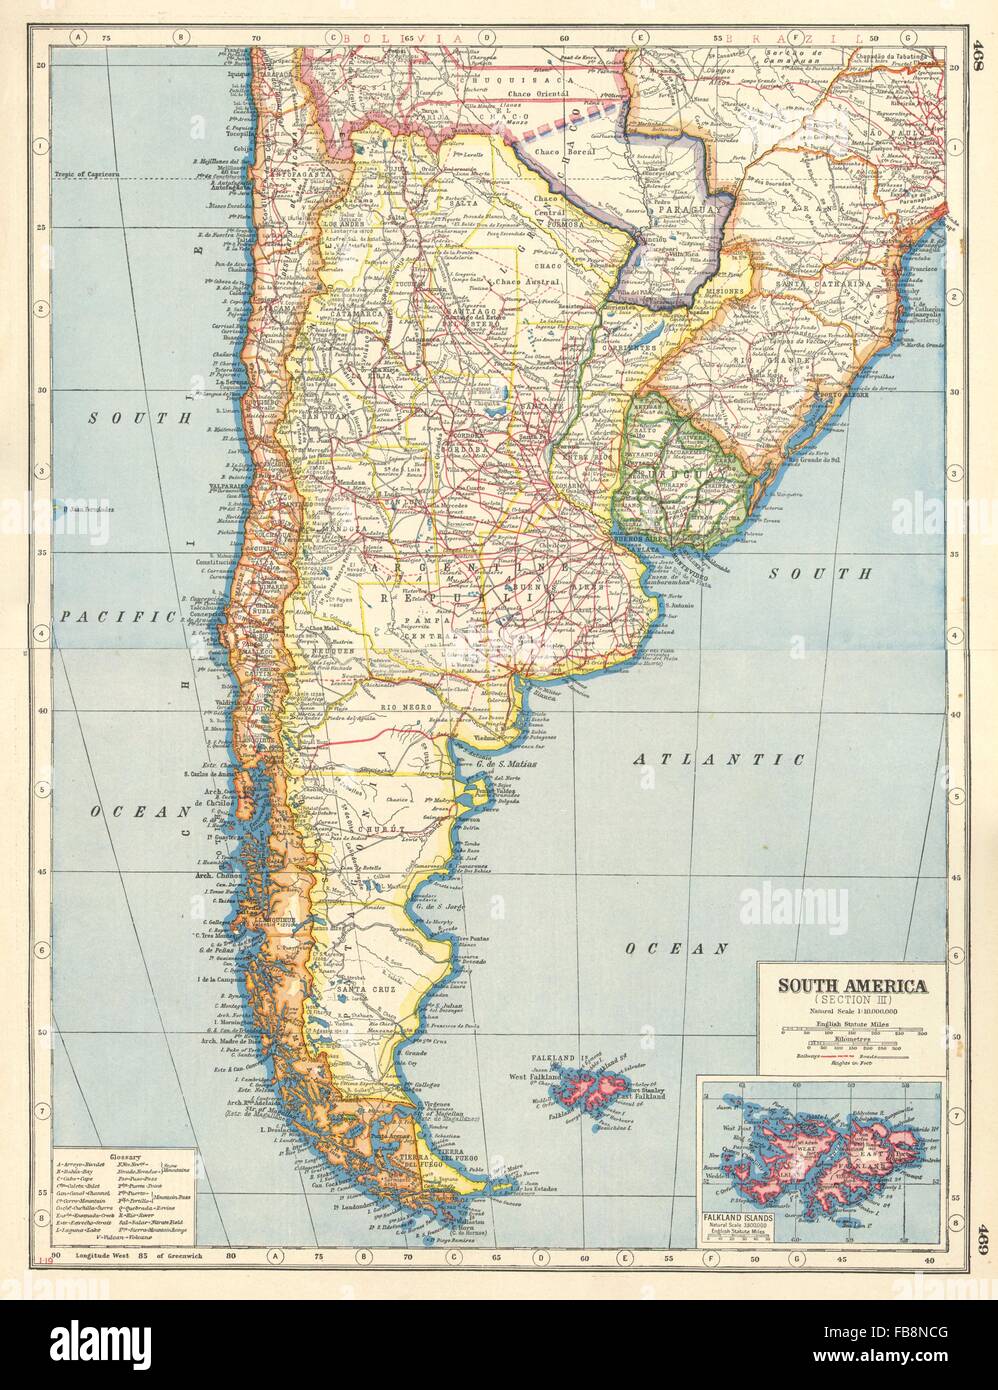 S AMERICA: Bolivia-Paraguay Gran Chaco border dispute. Chile Argentina, 1920 map Stock Photo